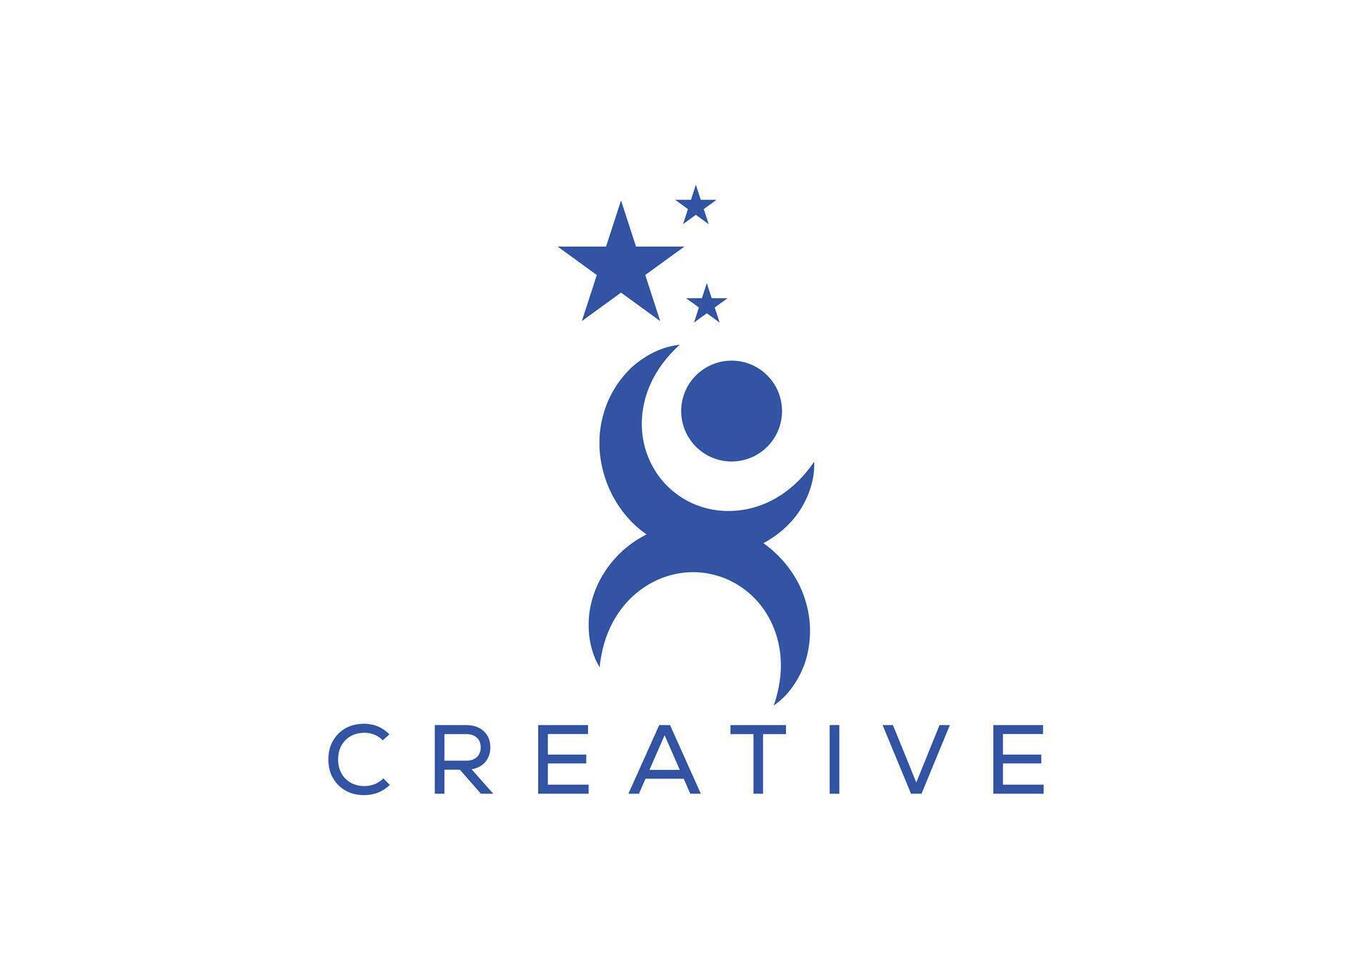 Minimalist Success people logo design vector template. Creative business growth people logo